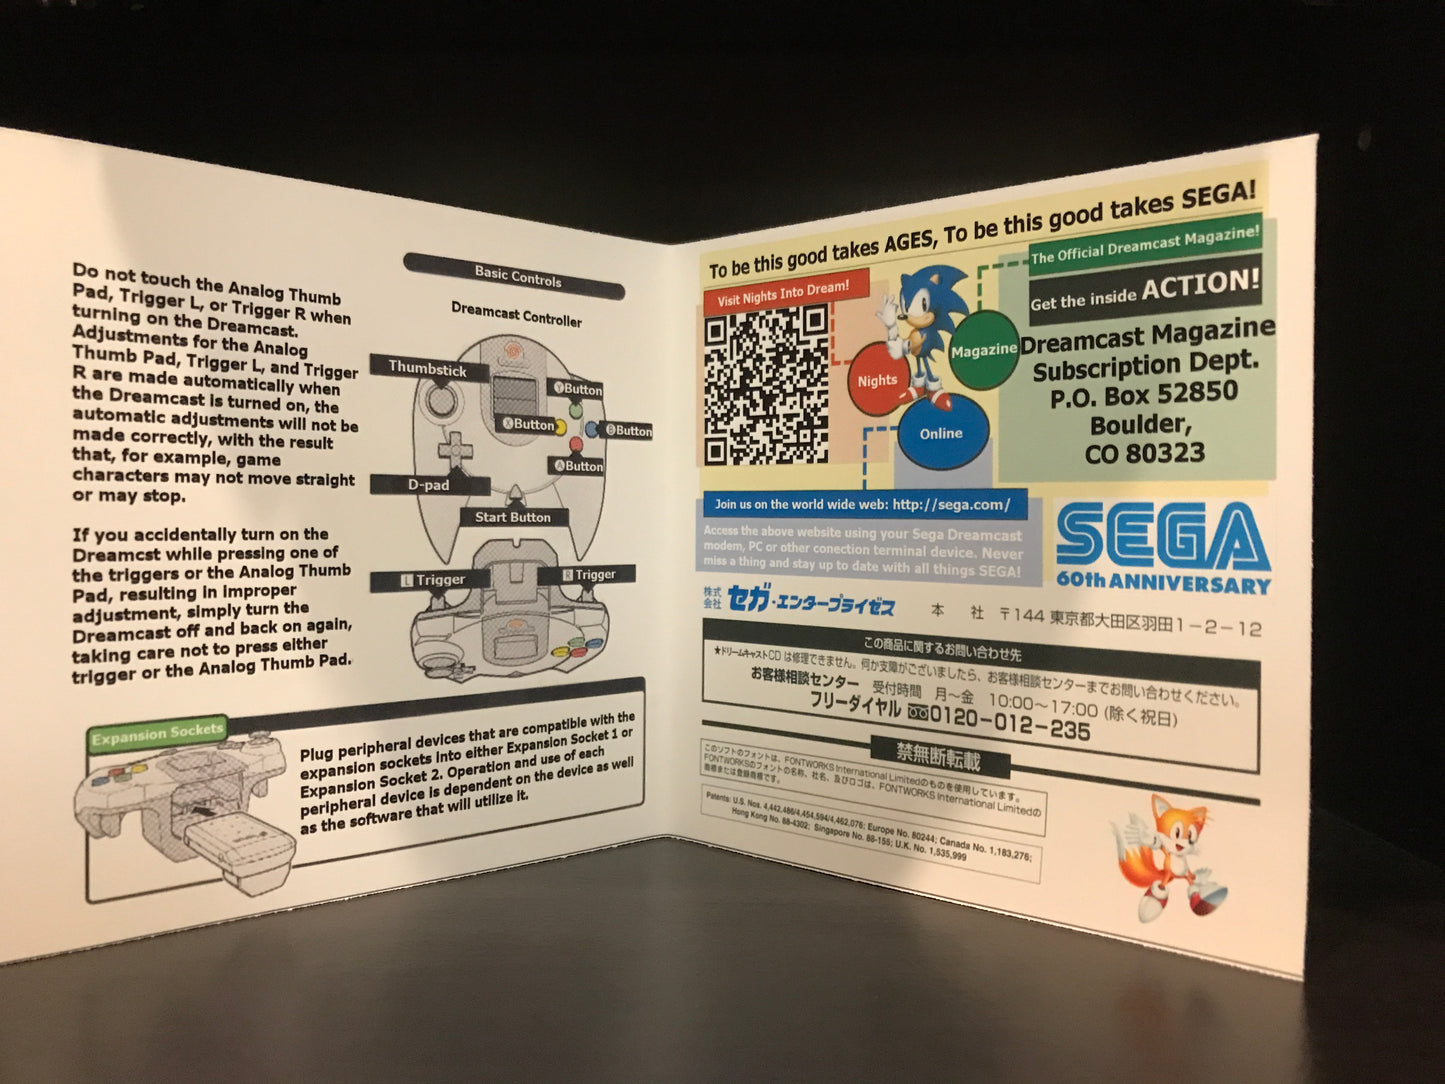 Confidential Mission [Sega Dreamcast] Reproduction